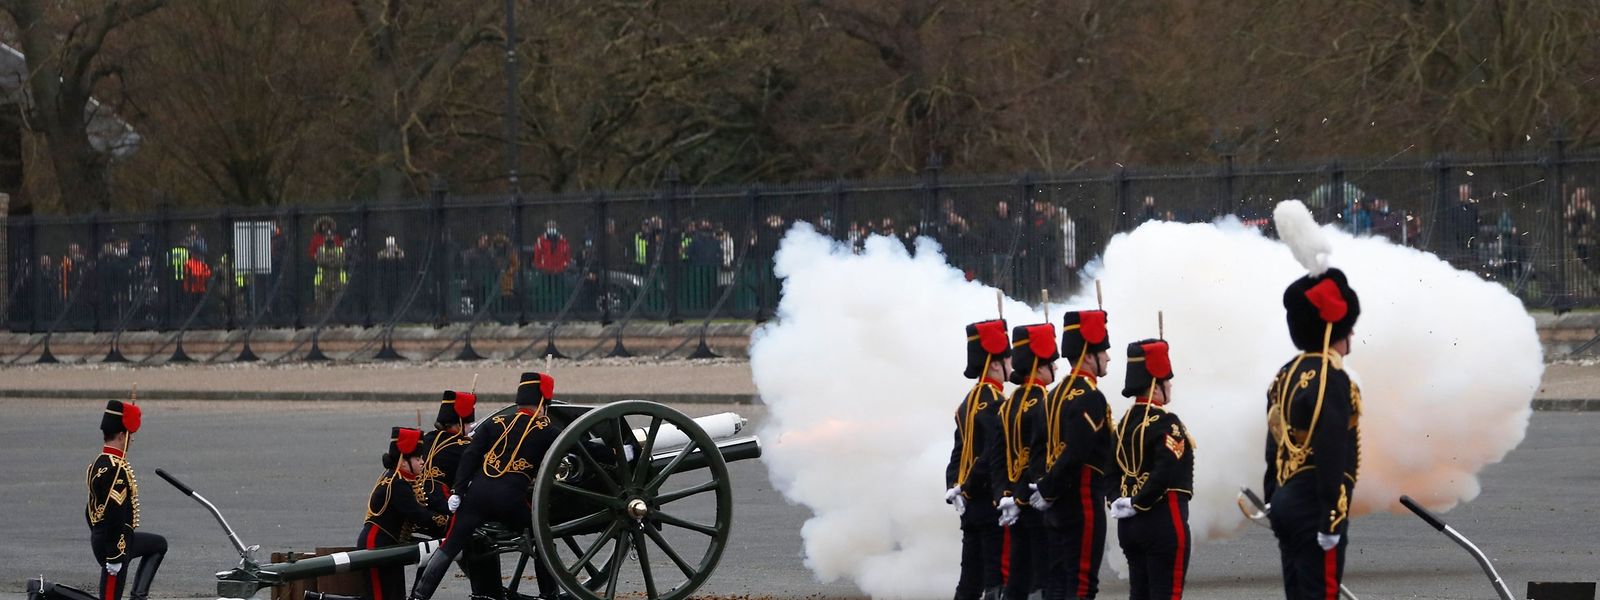 In Woolwich Barracks im Londoner Zentrum ehrt die Armee den verstorbenen Gemahl der Queen. 